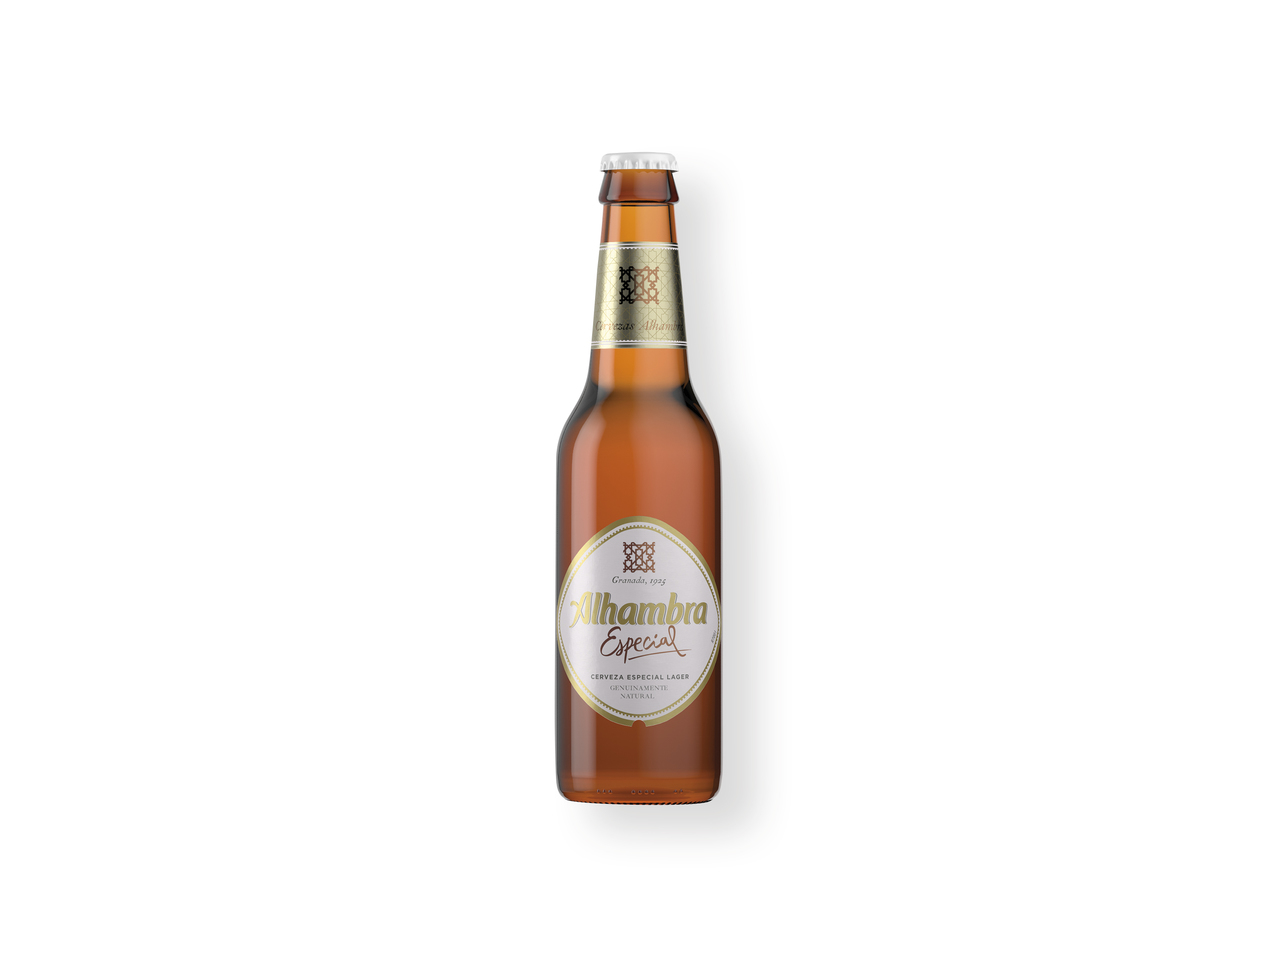 'Alhambra(R)' Cerveza